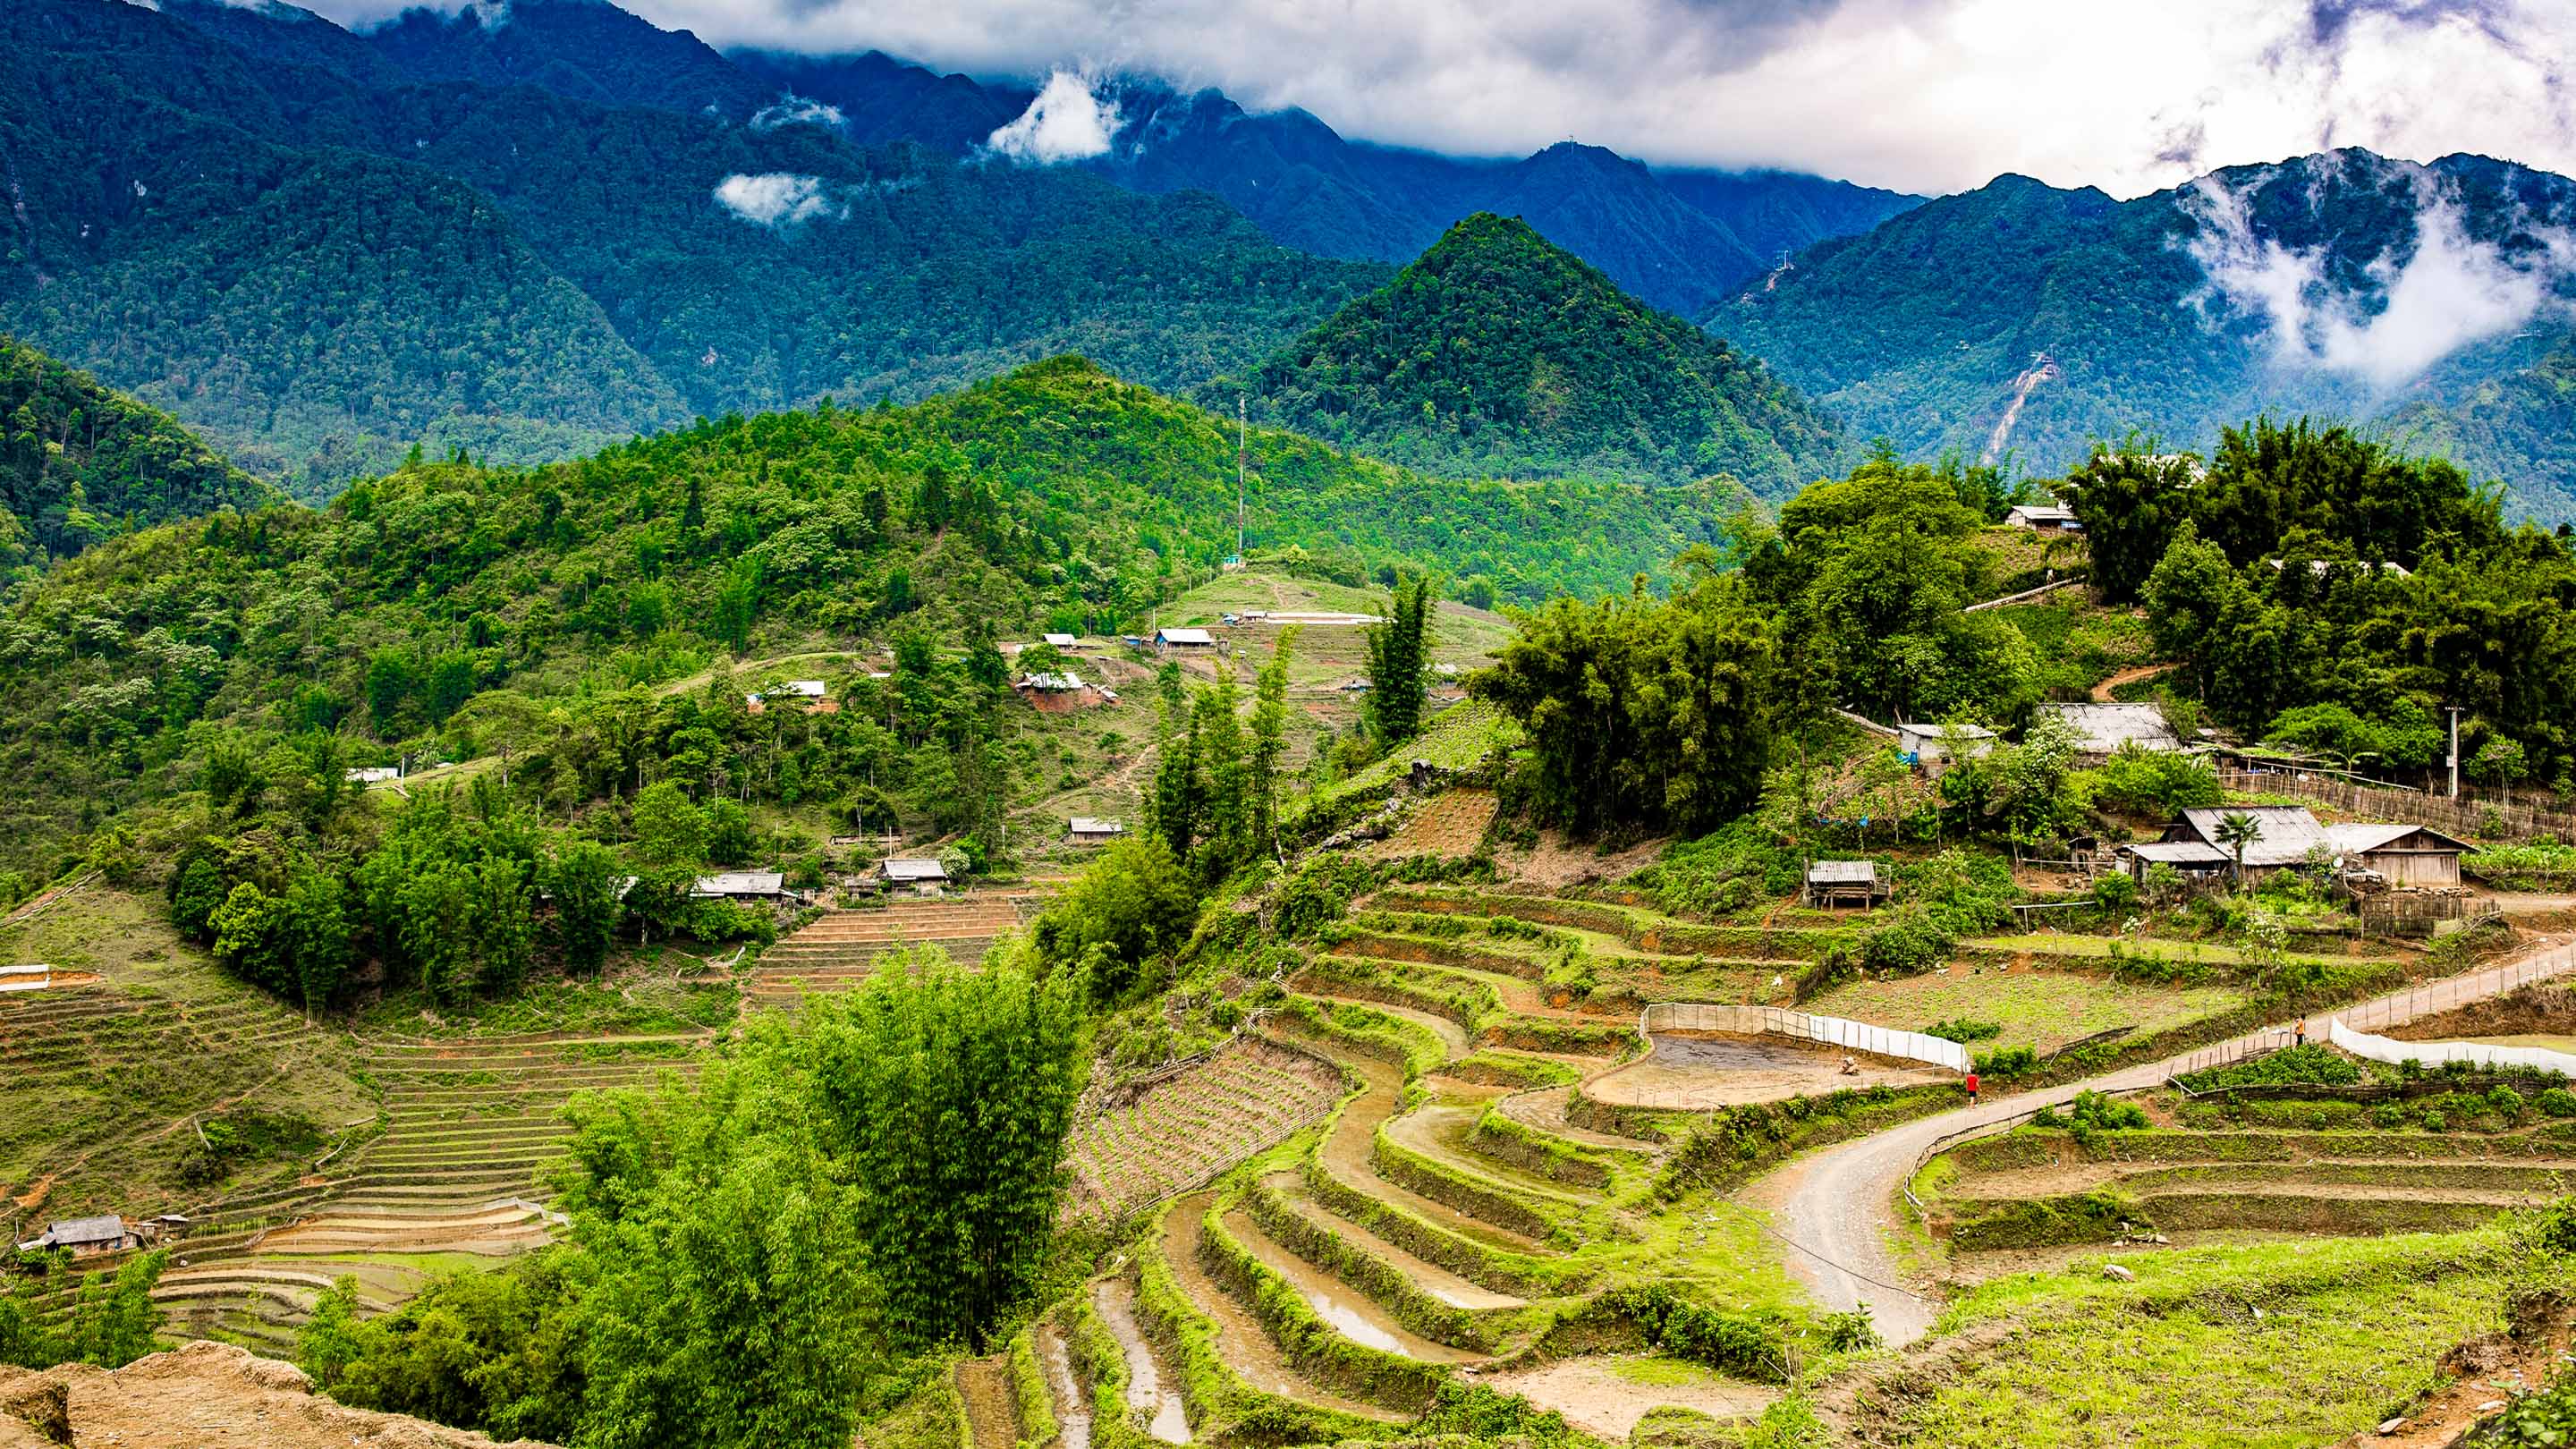 View across the hills of Sapa, Vietnam